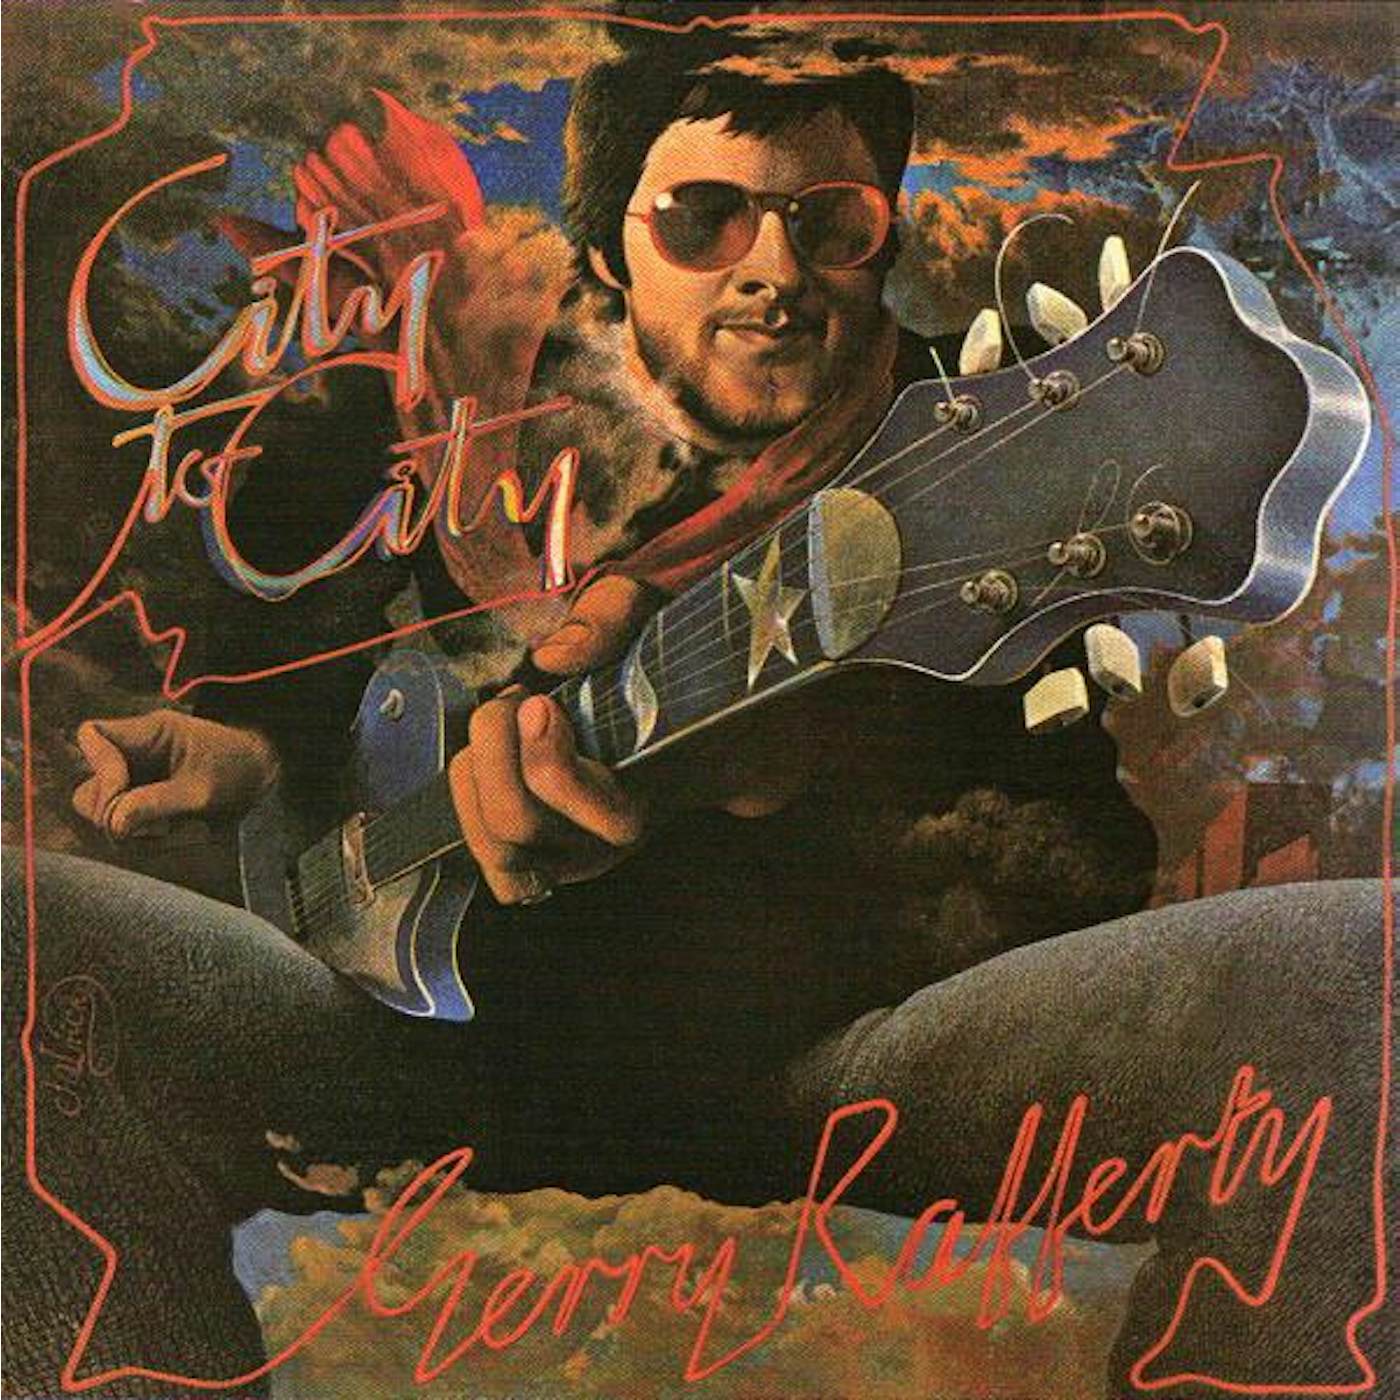 Gerry Rafferty CITY TO CITY CD